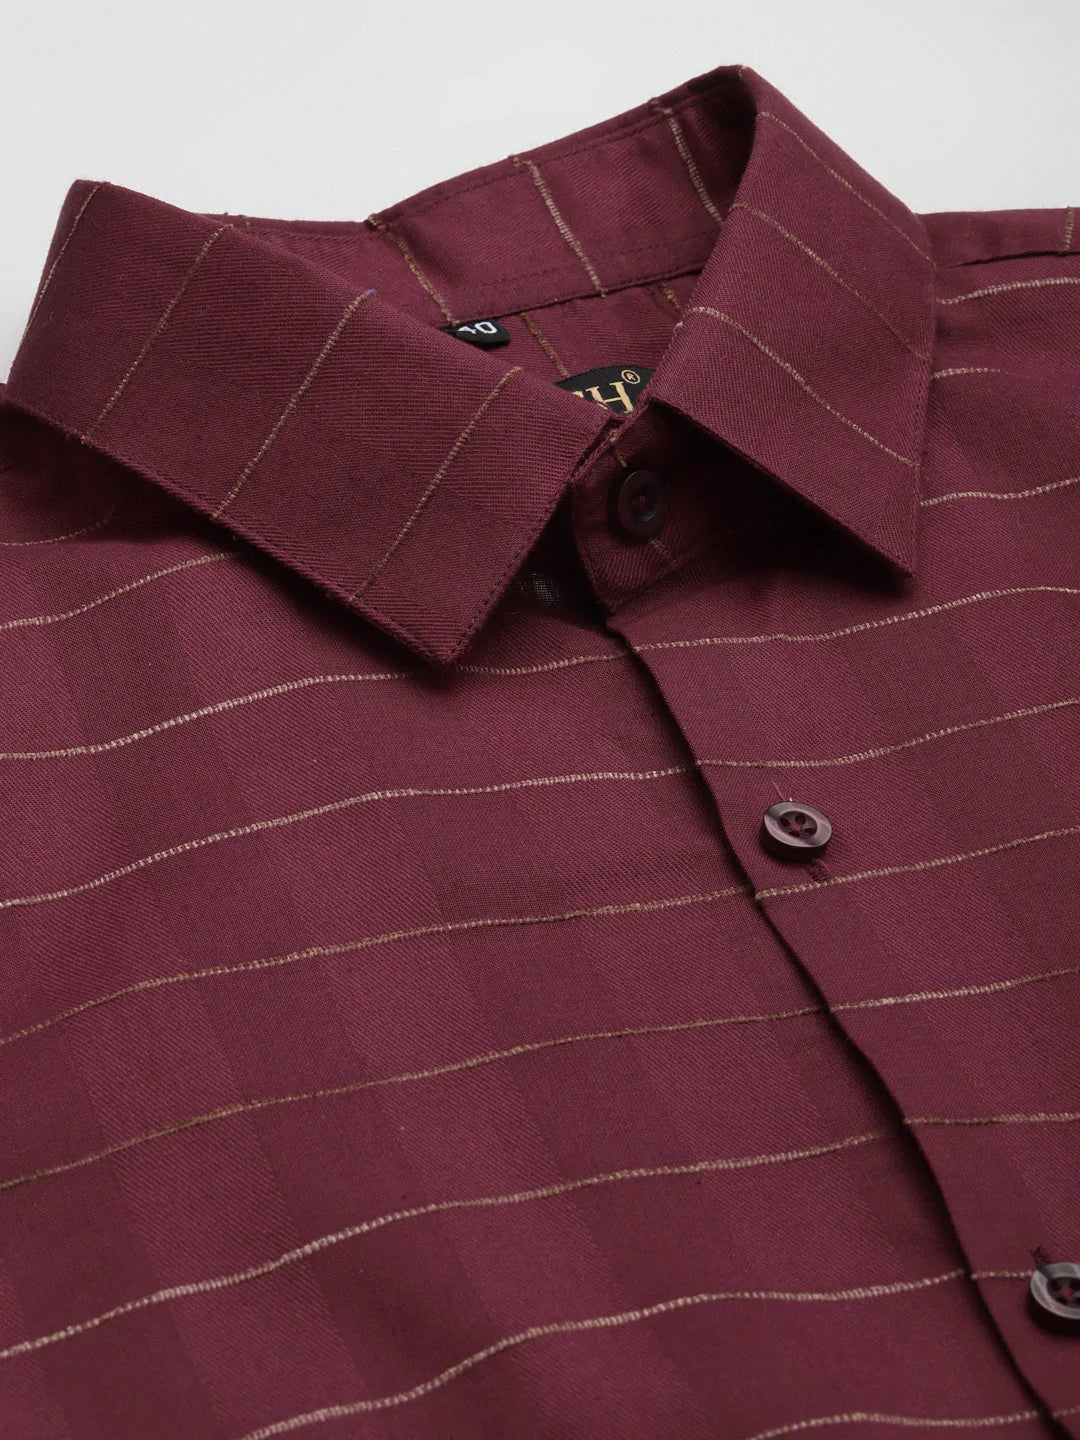 Jainish Men's Formal Cotton Horizontal Striped Shirt ( SF 790Maroon )